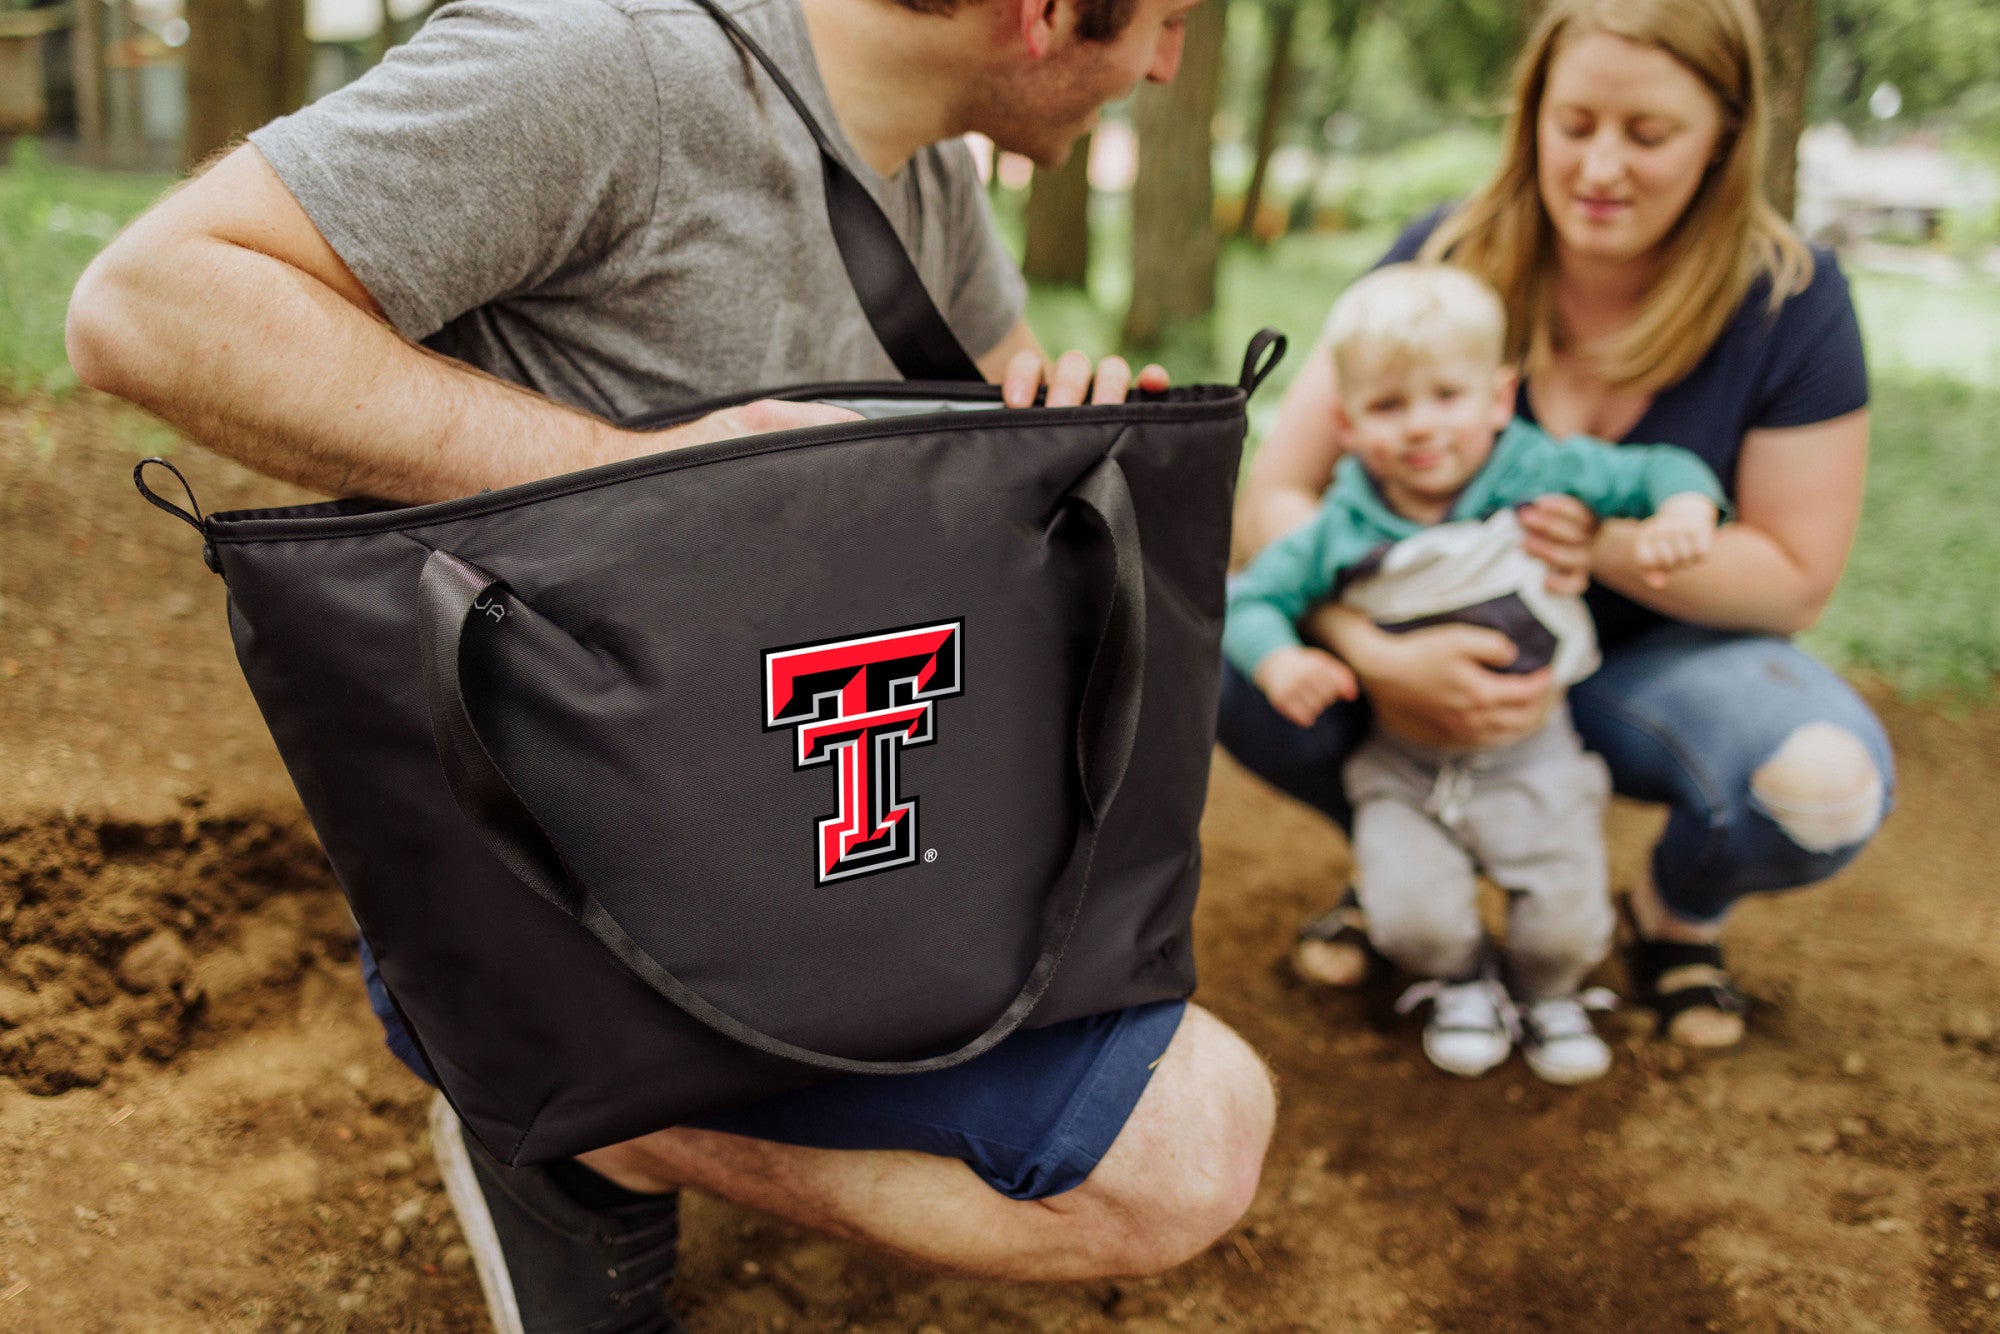 Texas Tech Red Raiders - Tarana Cooler Tote Bag